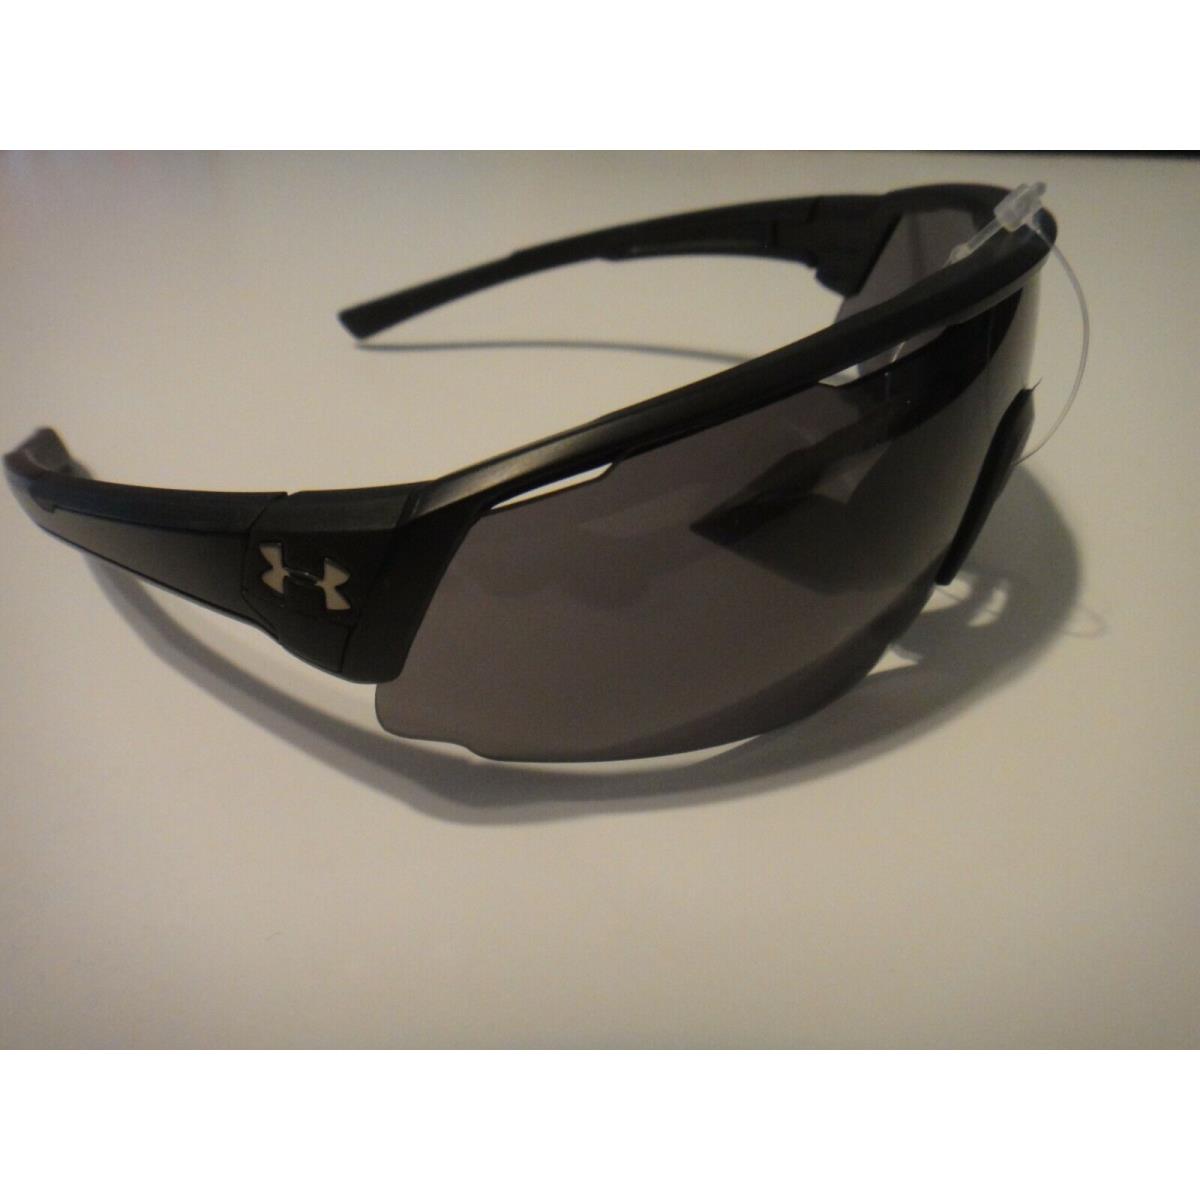 Under Armour Men Change up Dual Baseball Sunglasses Black 8600107-010100